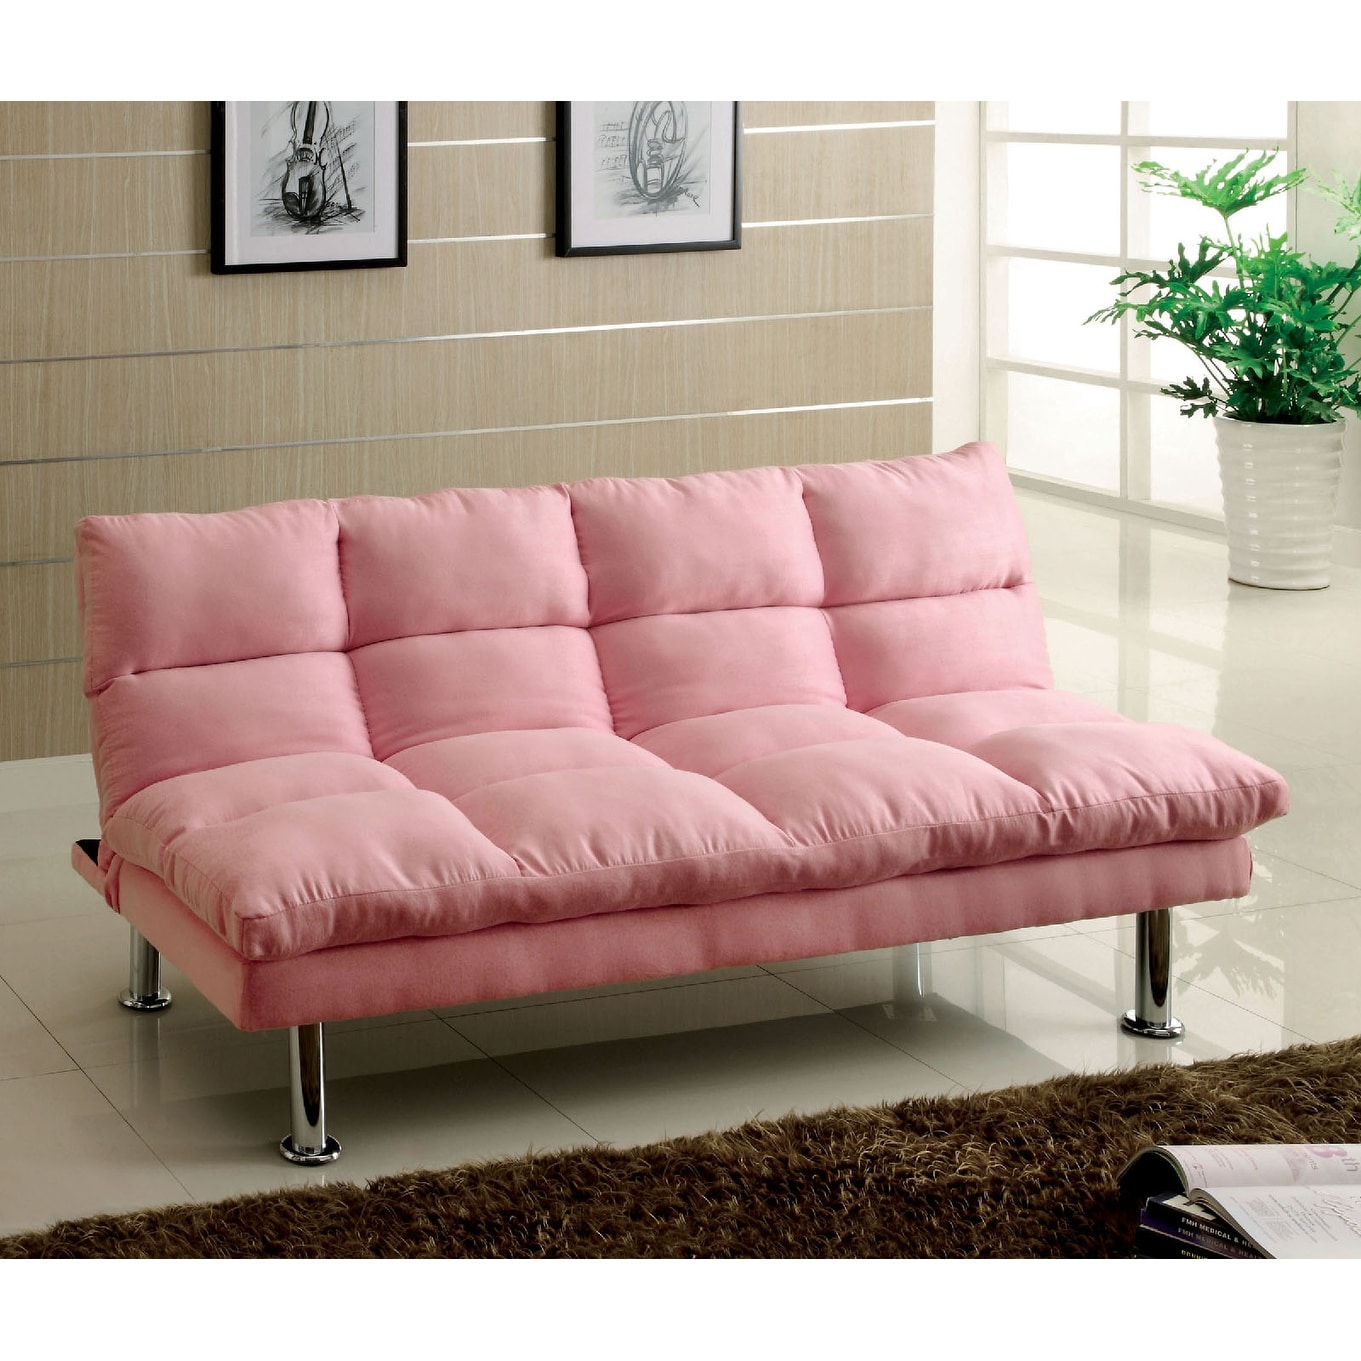 Simple Relax Microfiber Convertible Sleeper Sofa